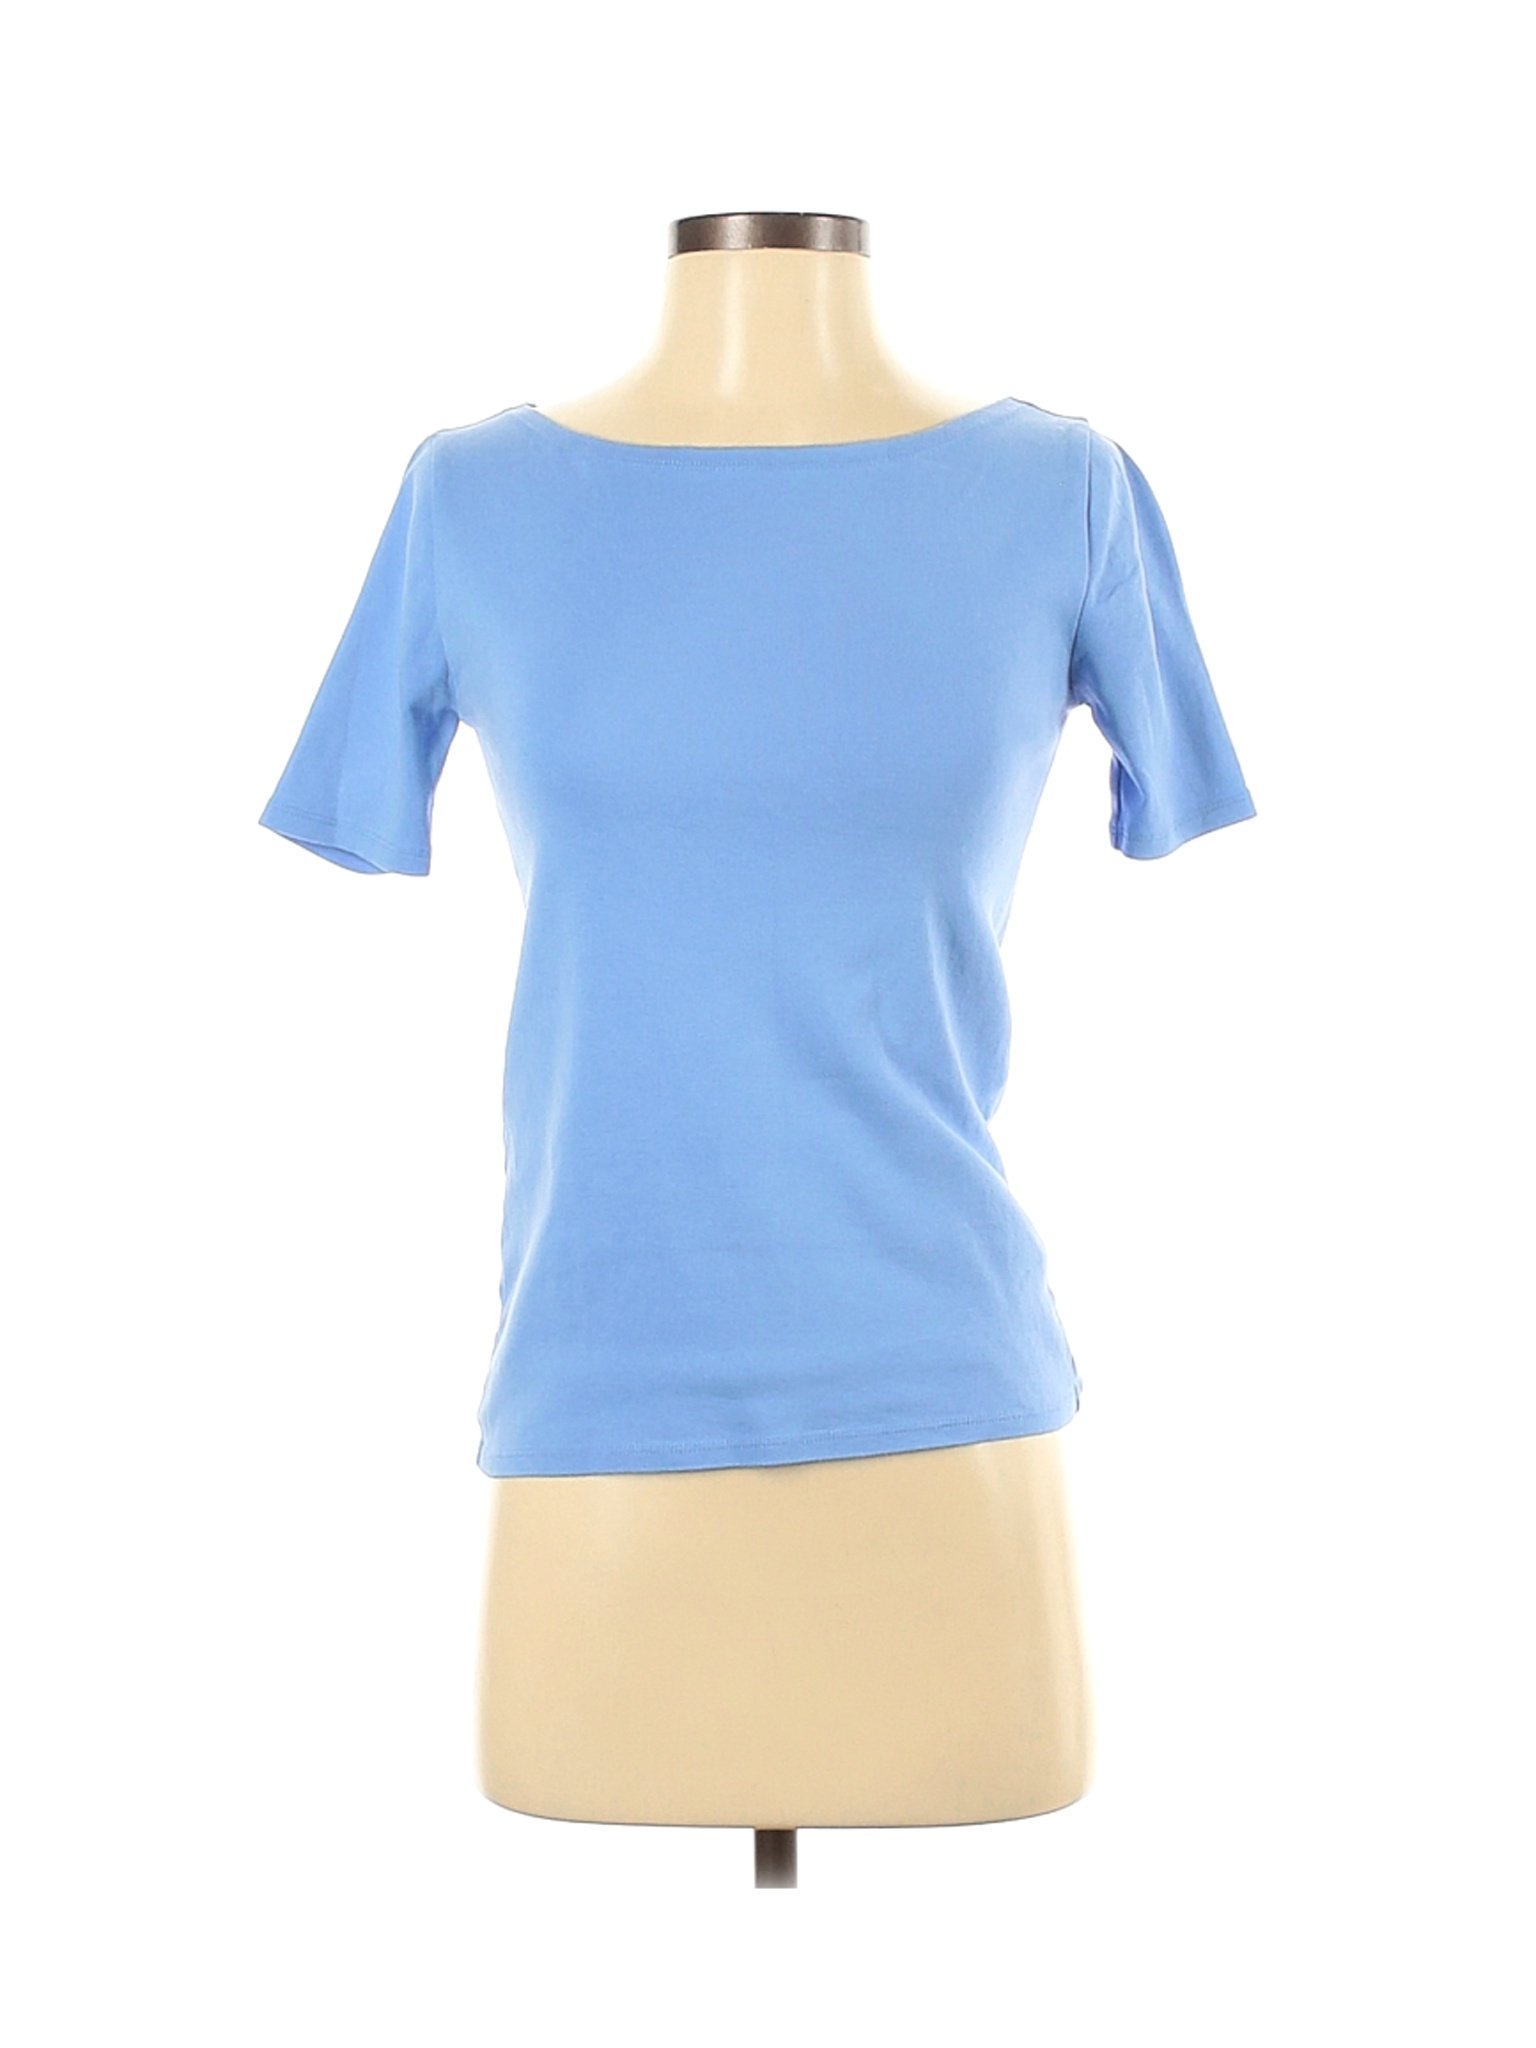 J. by J.Crew Women Blue Short Sleeve T-Shirt XS | eBay